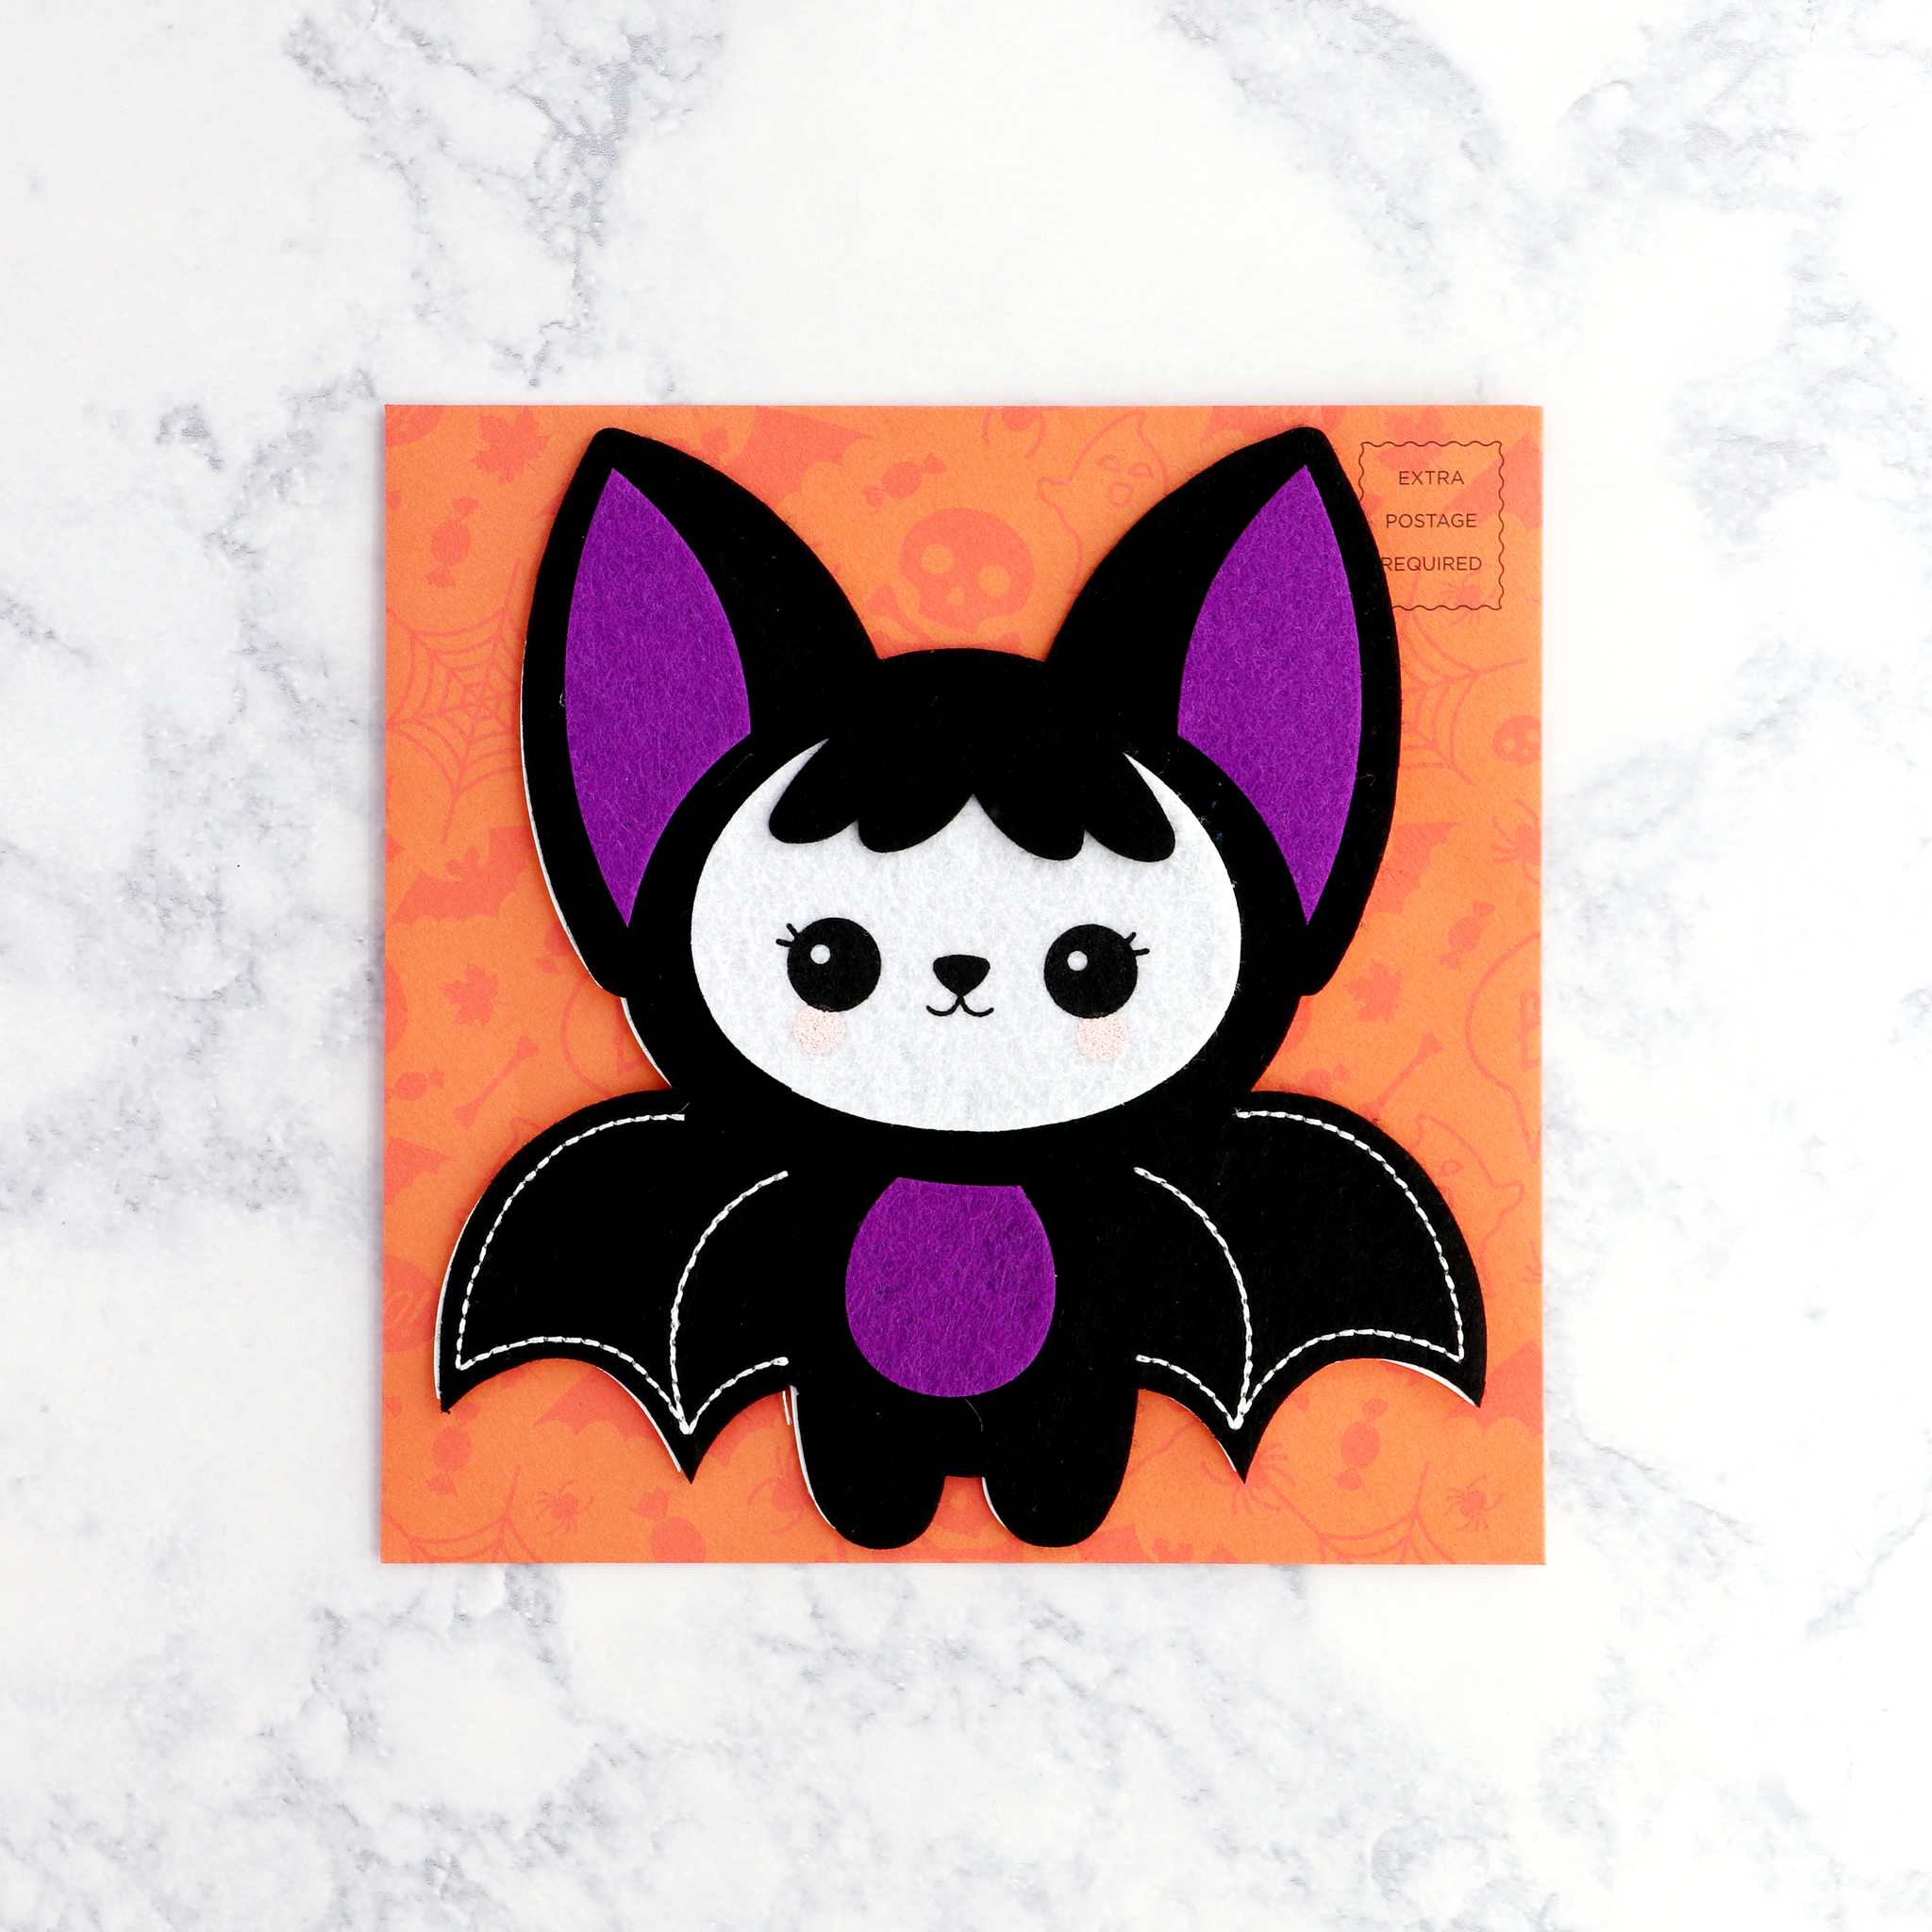 Felt Bat Halloween Card